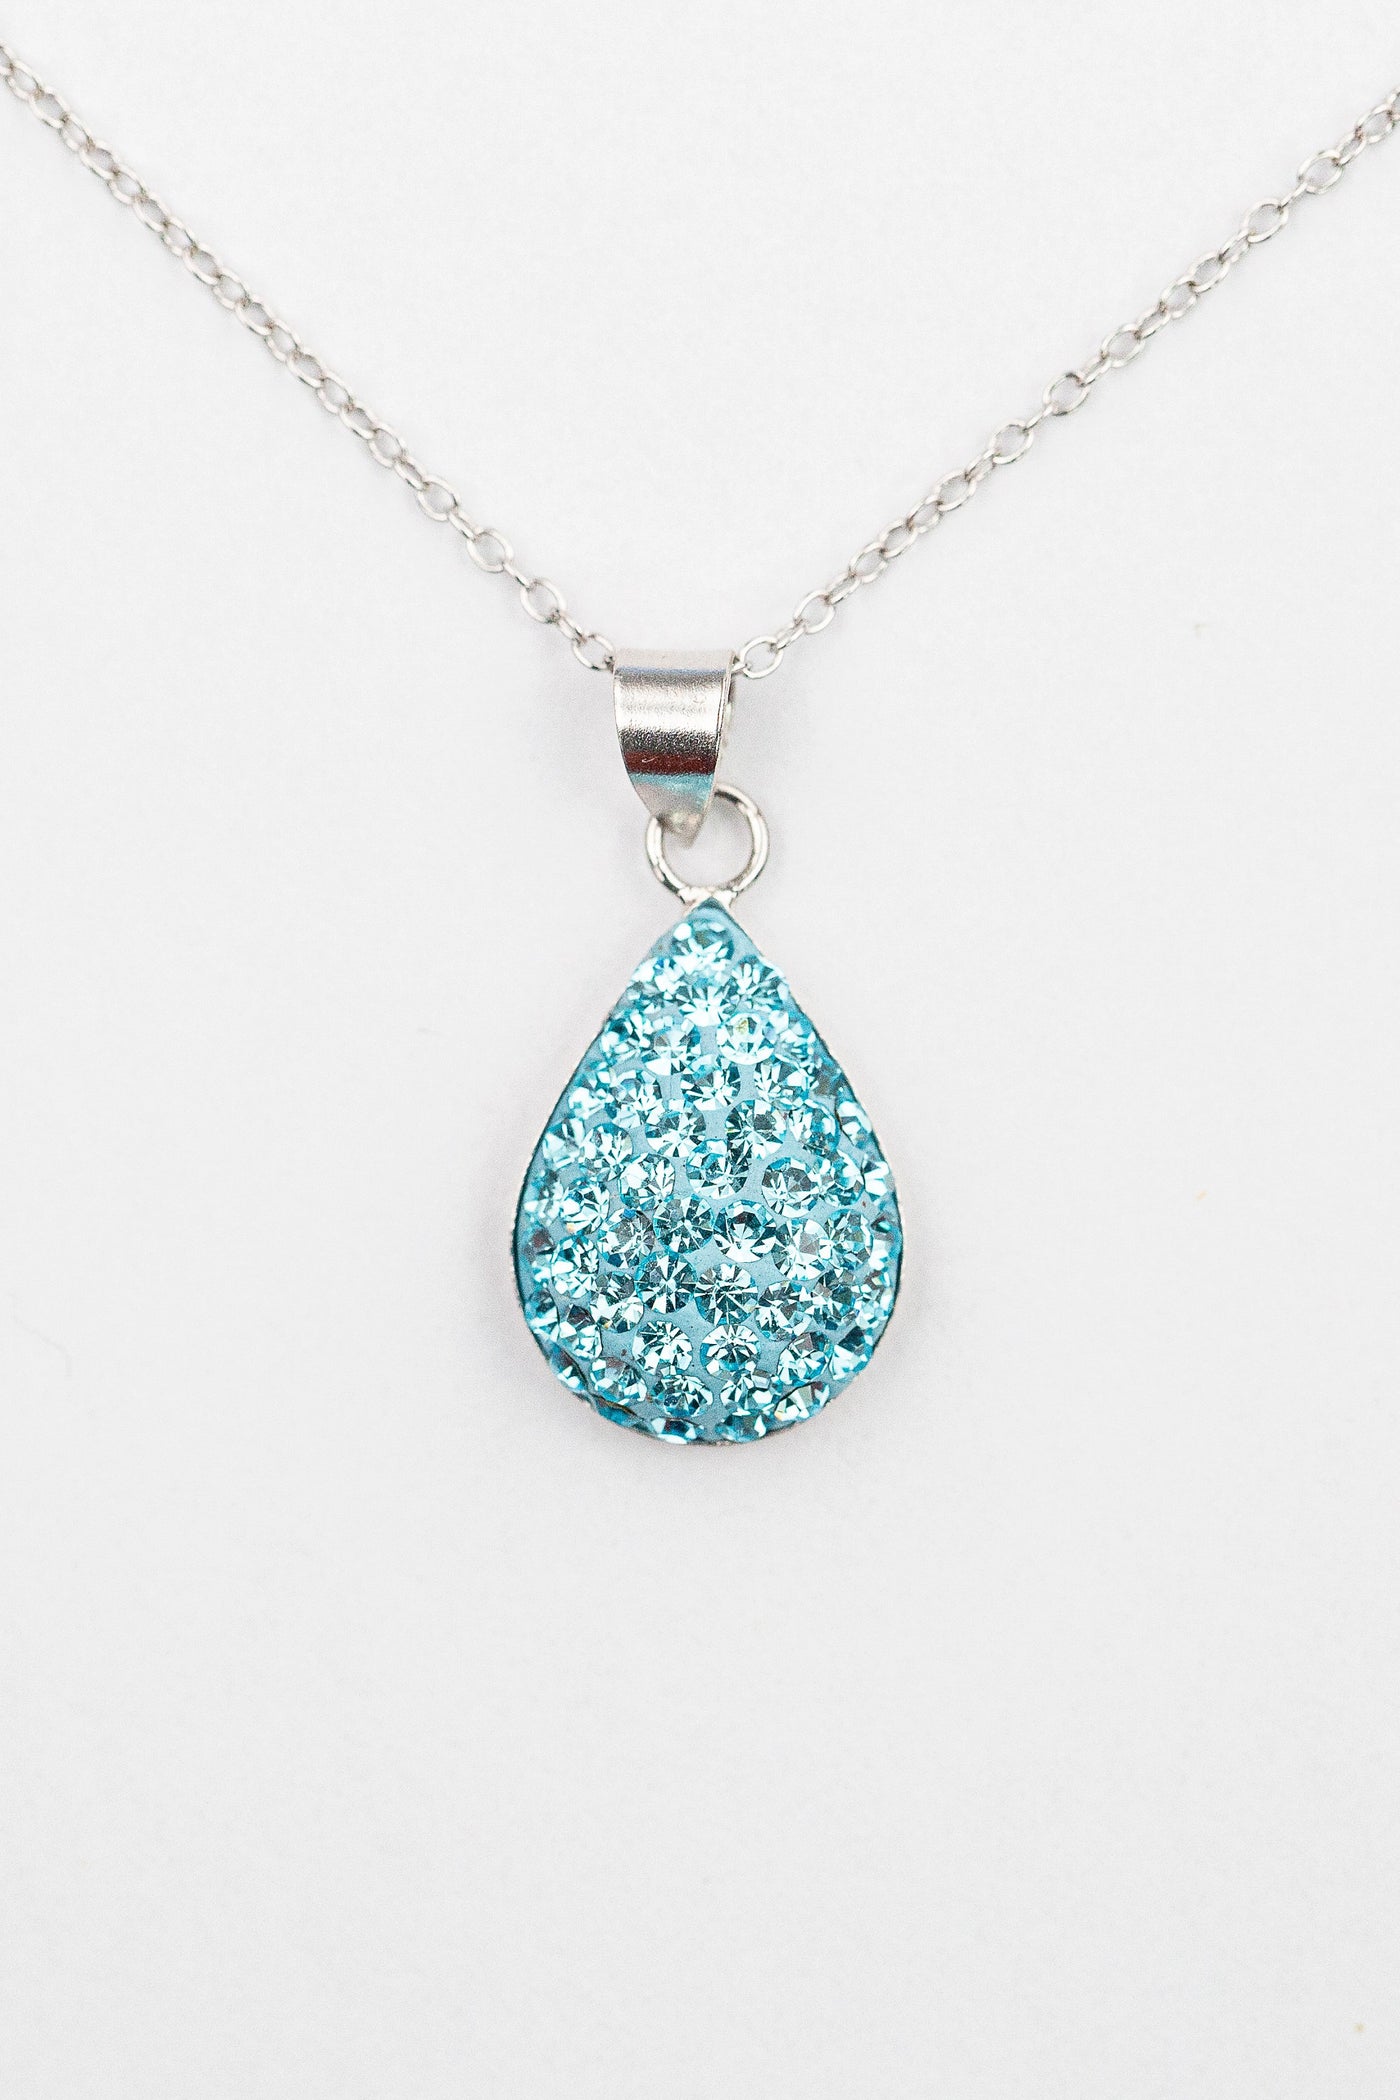 Swarovski Crystal Round Teardrop Silver Necklace in Aquamarine | Annie and Sisters